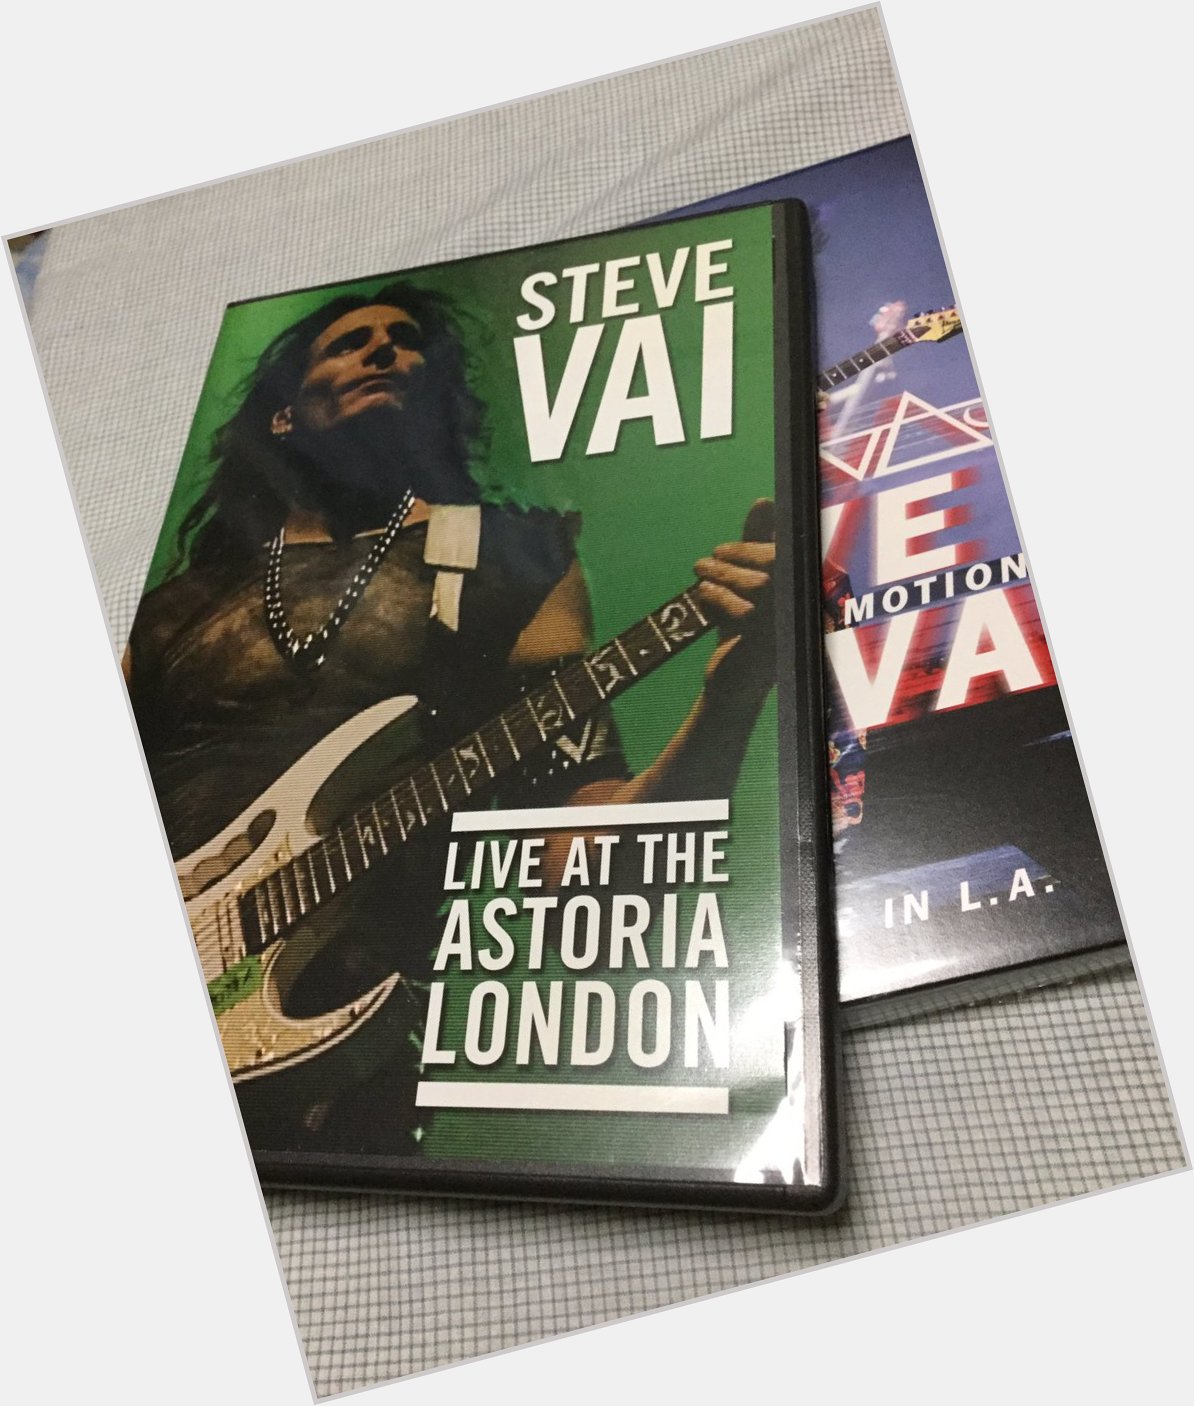 Steve Vai            DVD                 16                                                Happy Birthday Steve! 